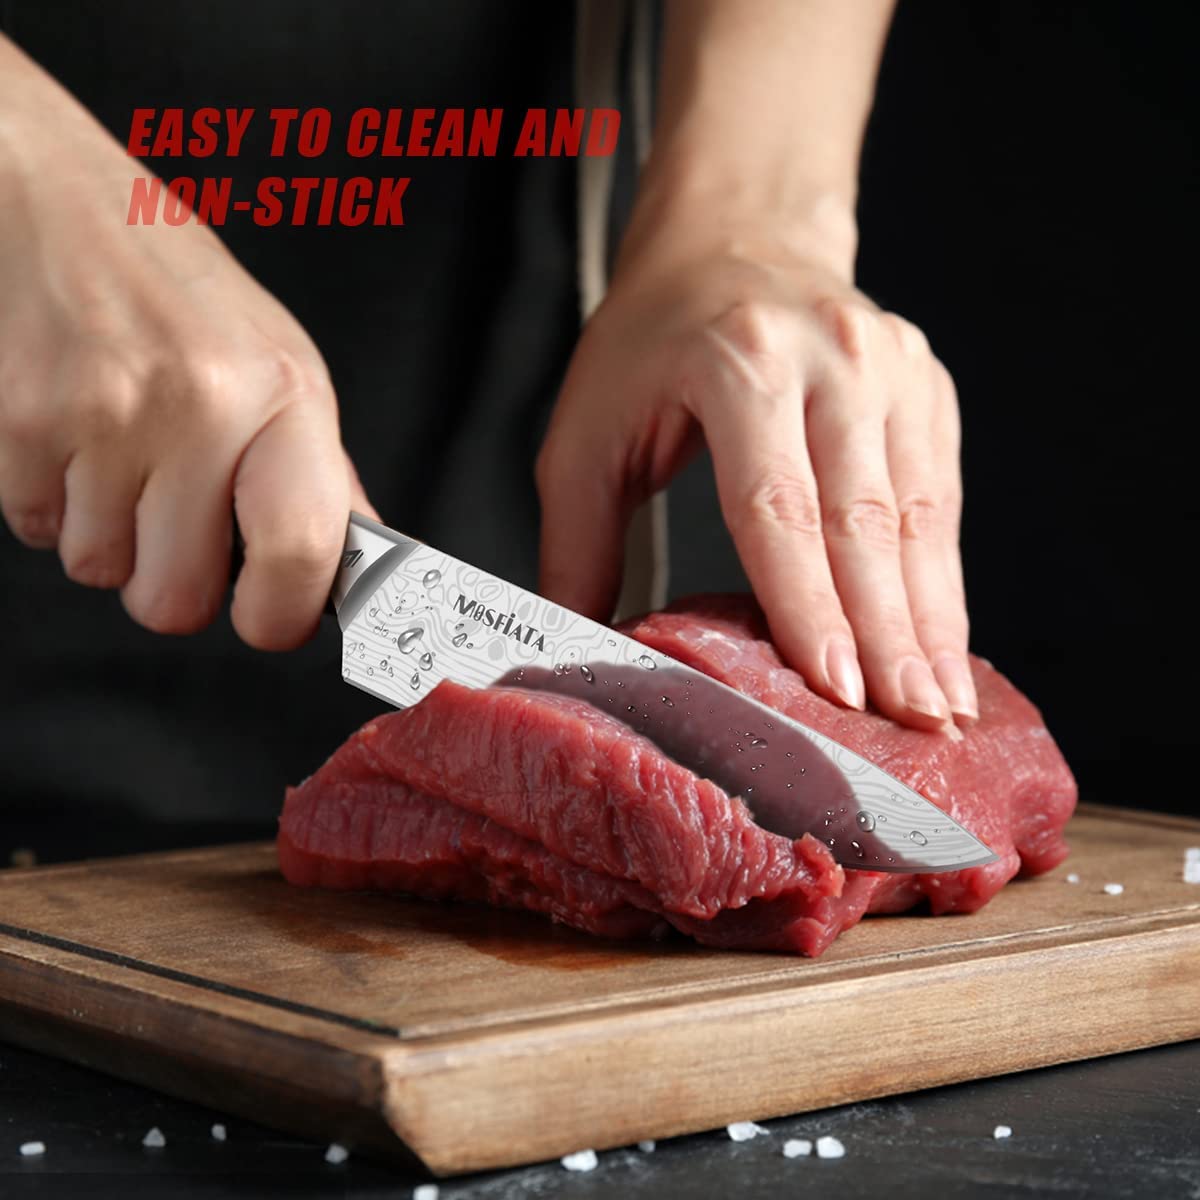 3-Piece Red Stainless Steel Santoku Knife Set